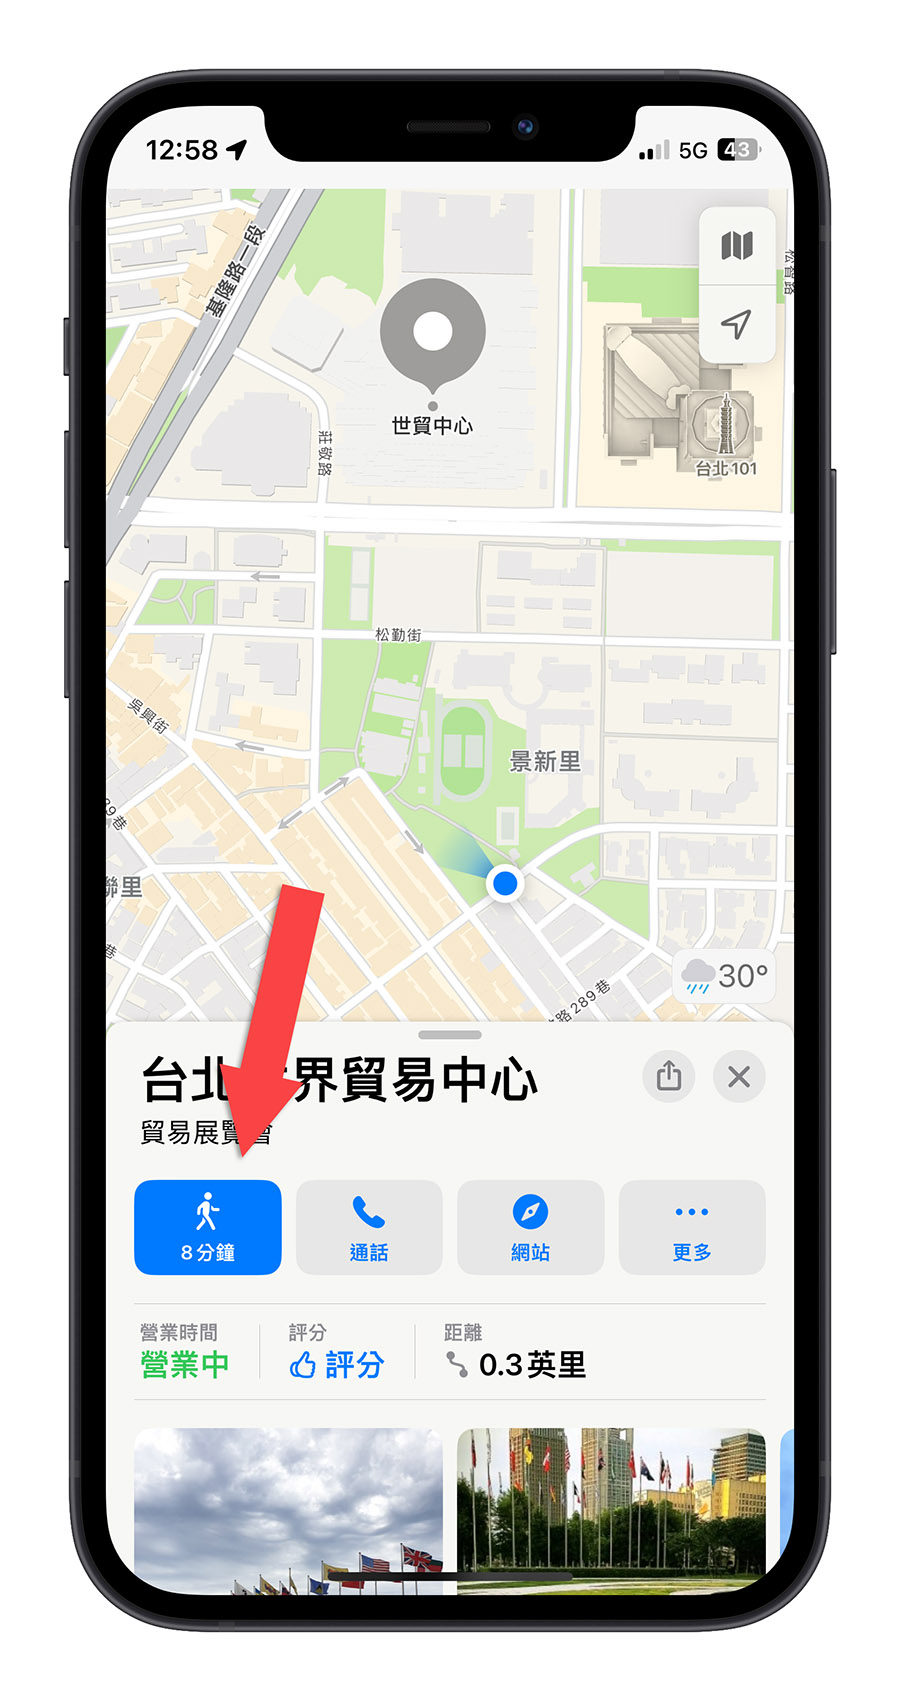 Apple Maps 地圖 3D AR 導航 更新